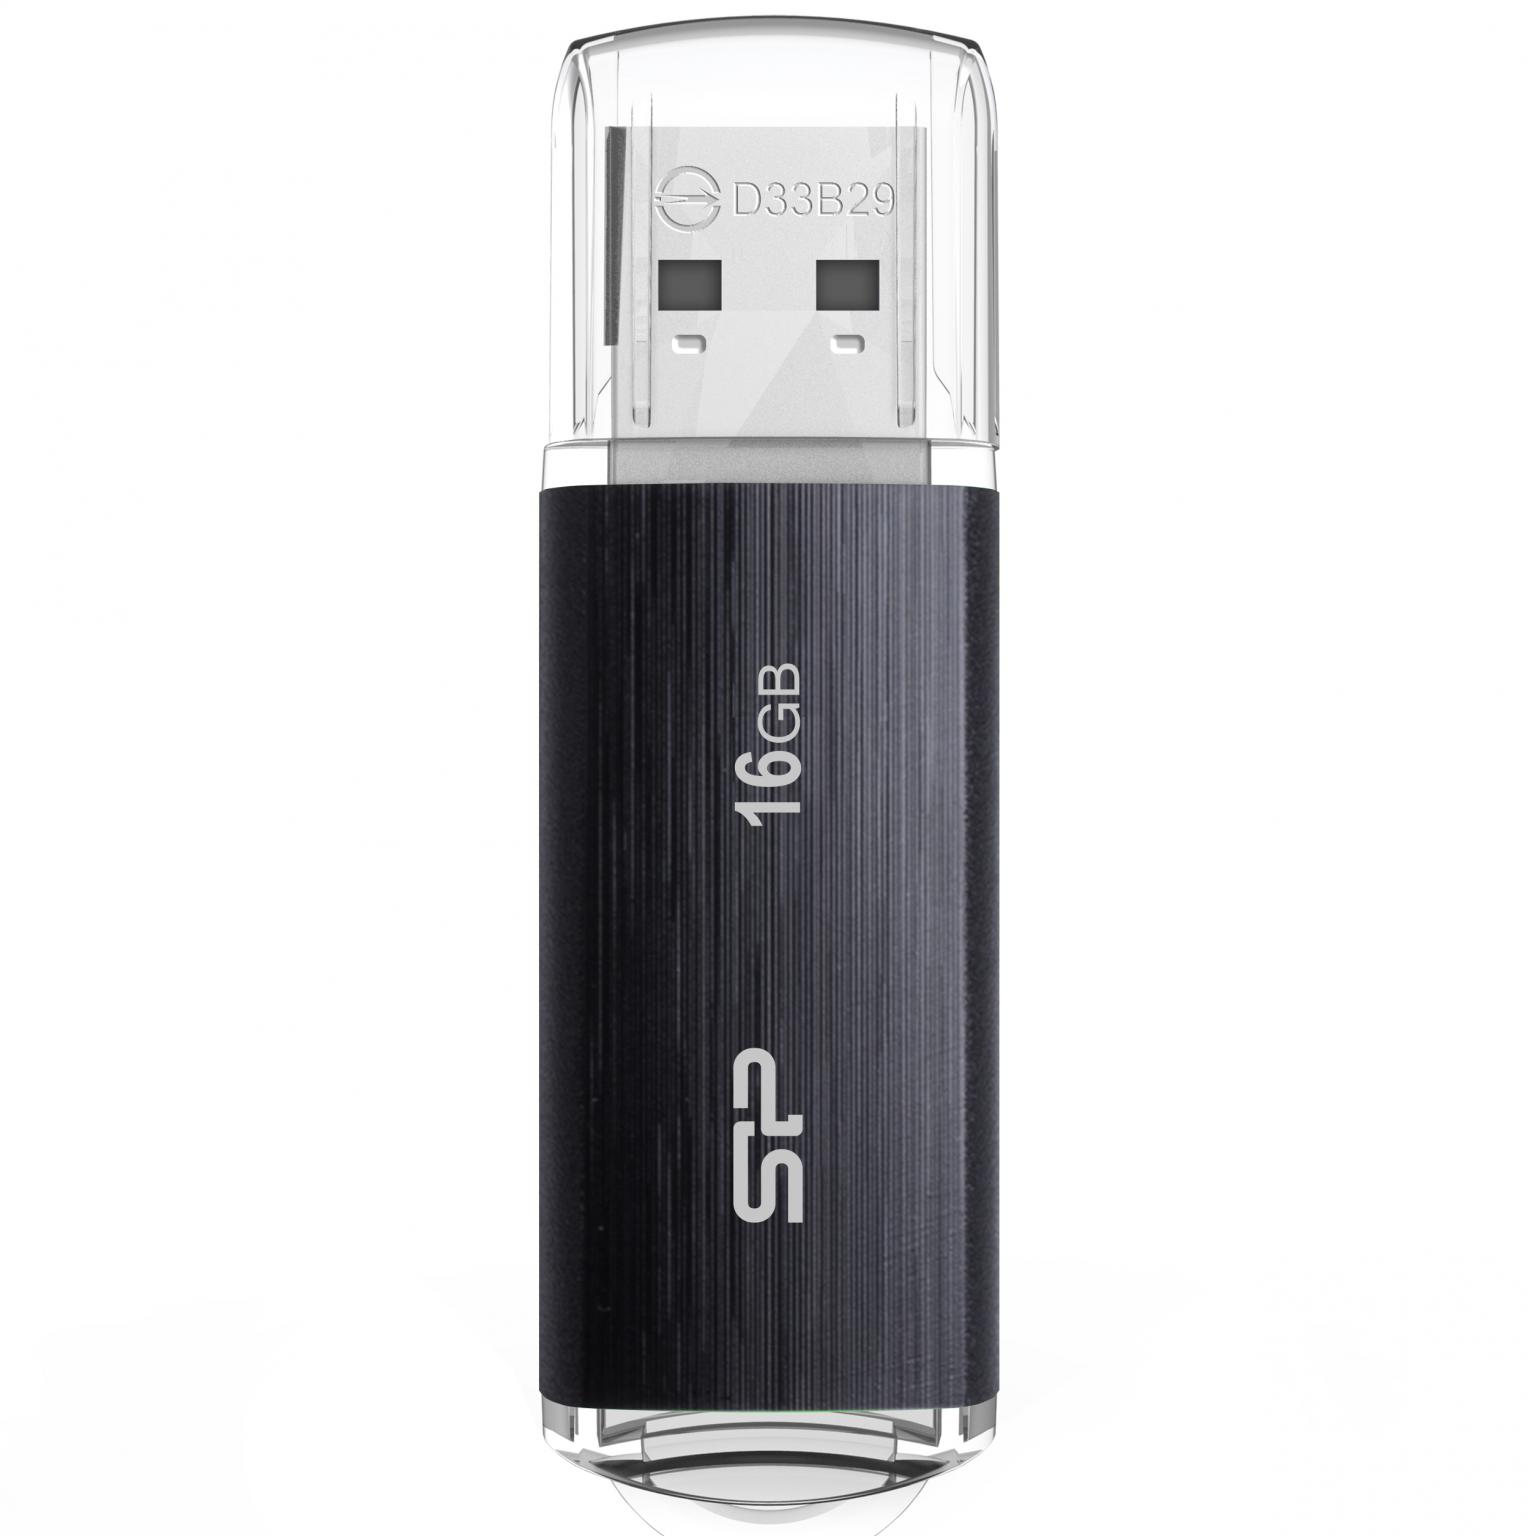 USB 3.1 Stick - 16GB - Silicon Power